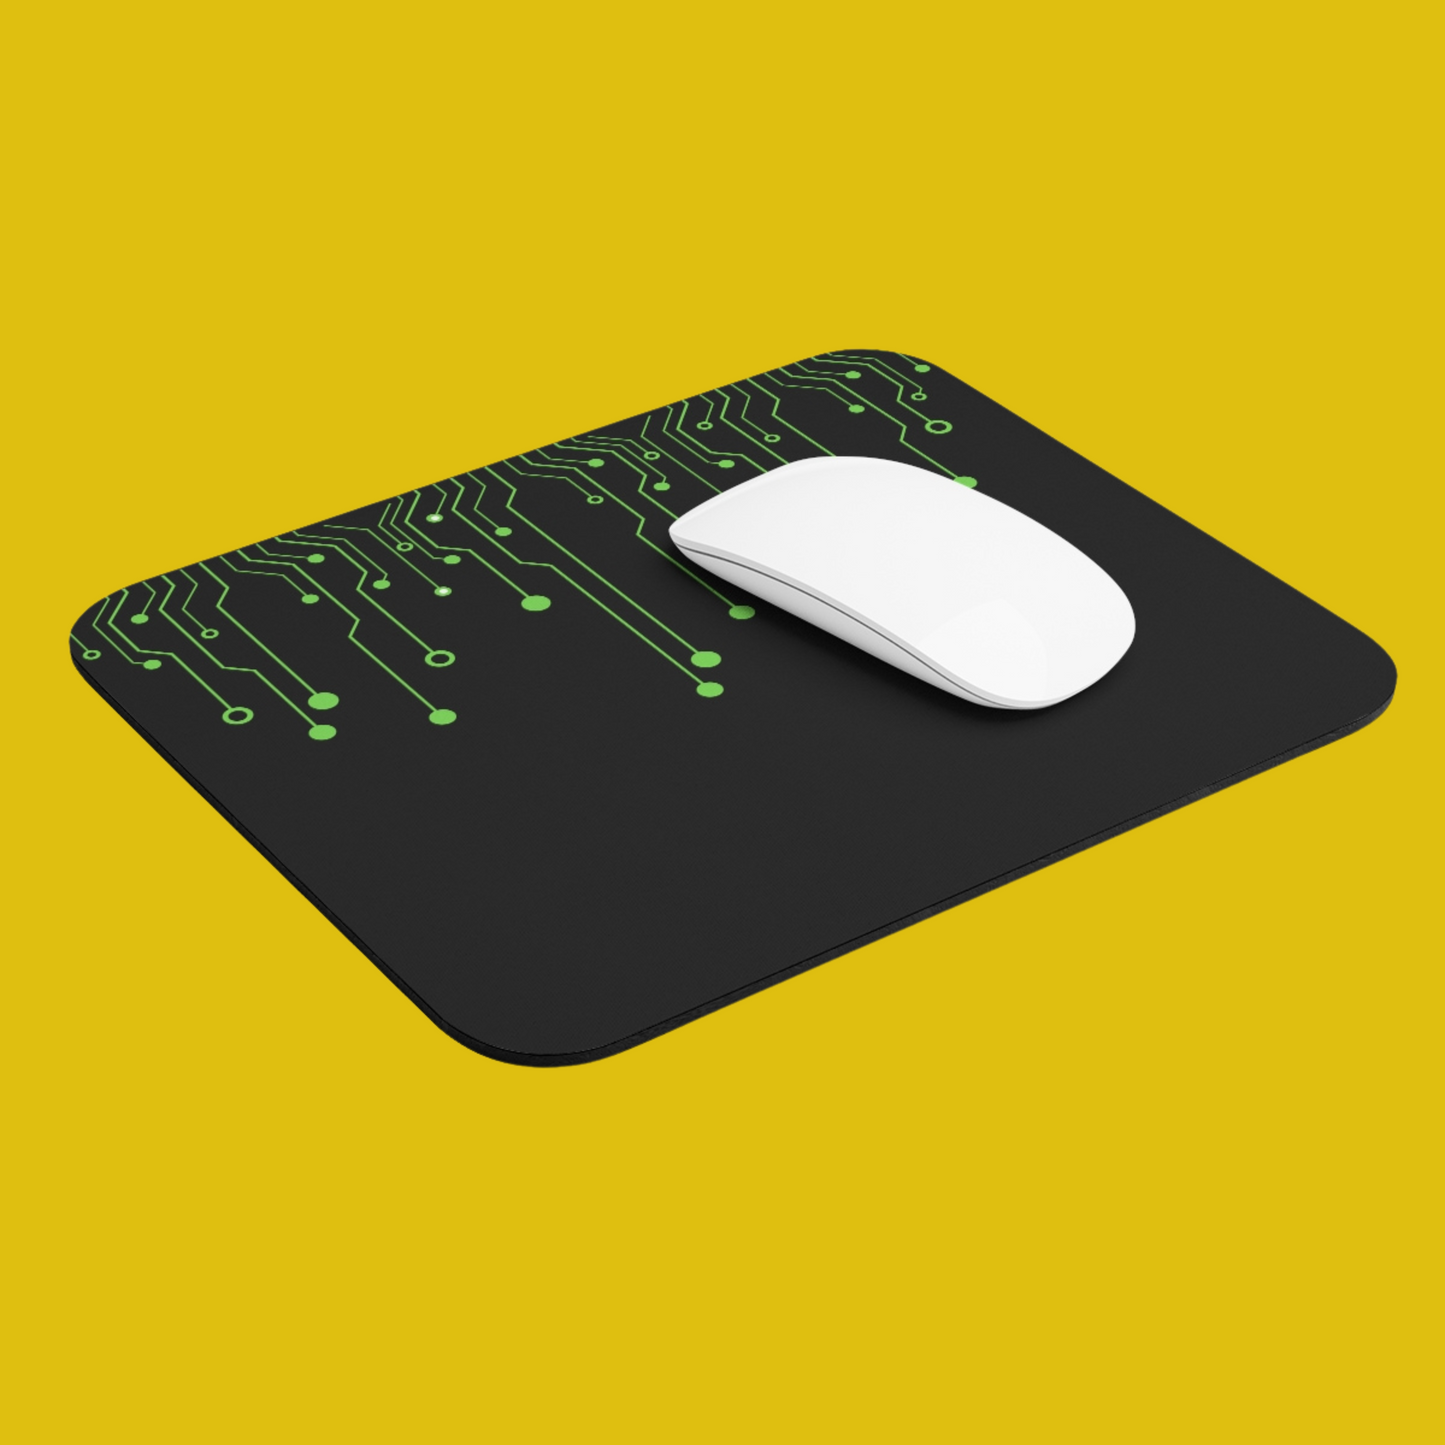 Electronic Circuit Mouse pad - Developer / Programmer / Coder / Software Engineer / DevOps